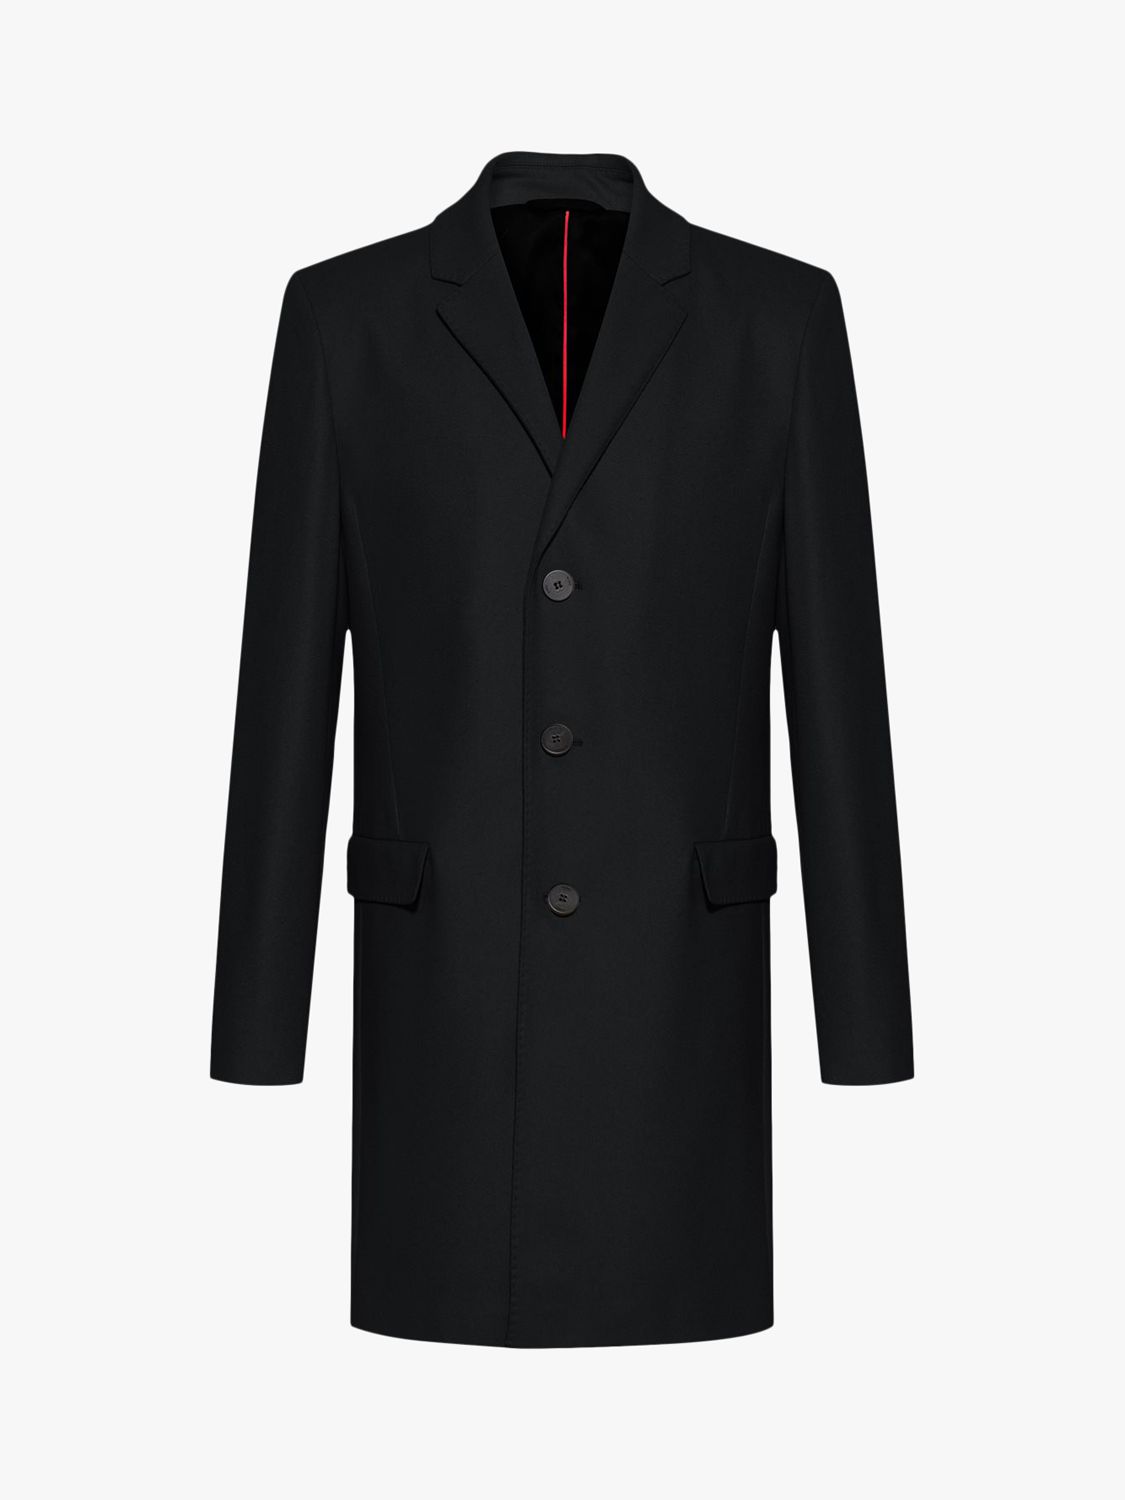 hugo boss coat sale uk